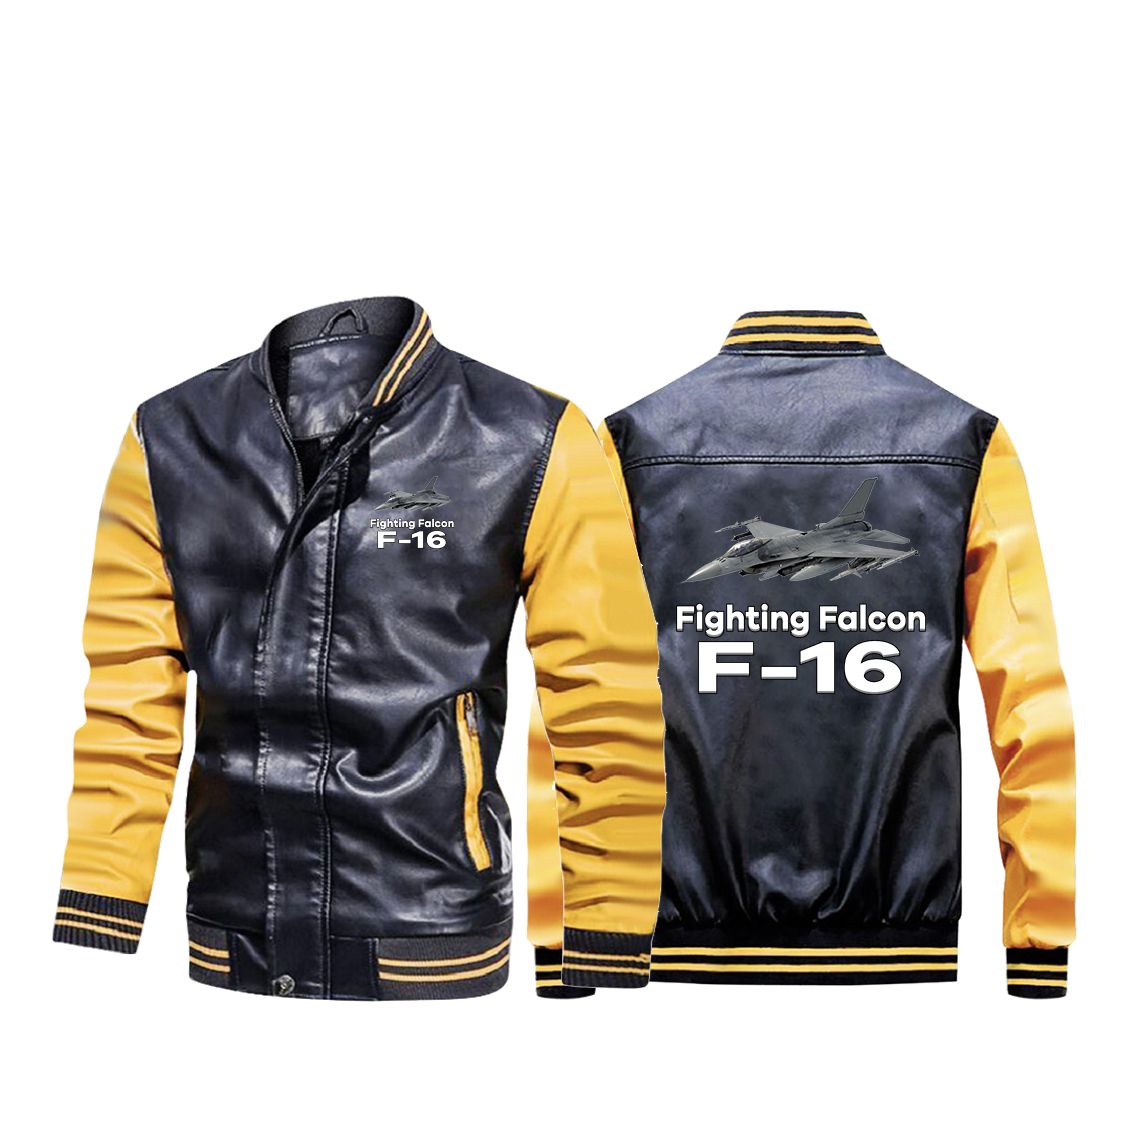 The Fighting Falcon F16 Designed Stylish Leather Bomber Jackets